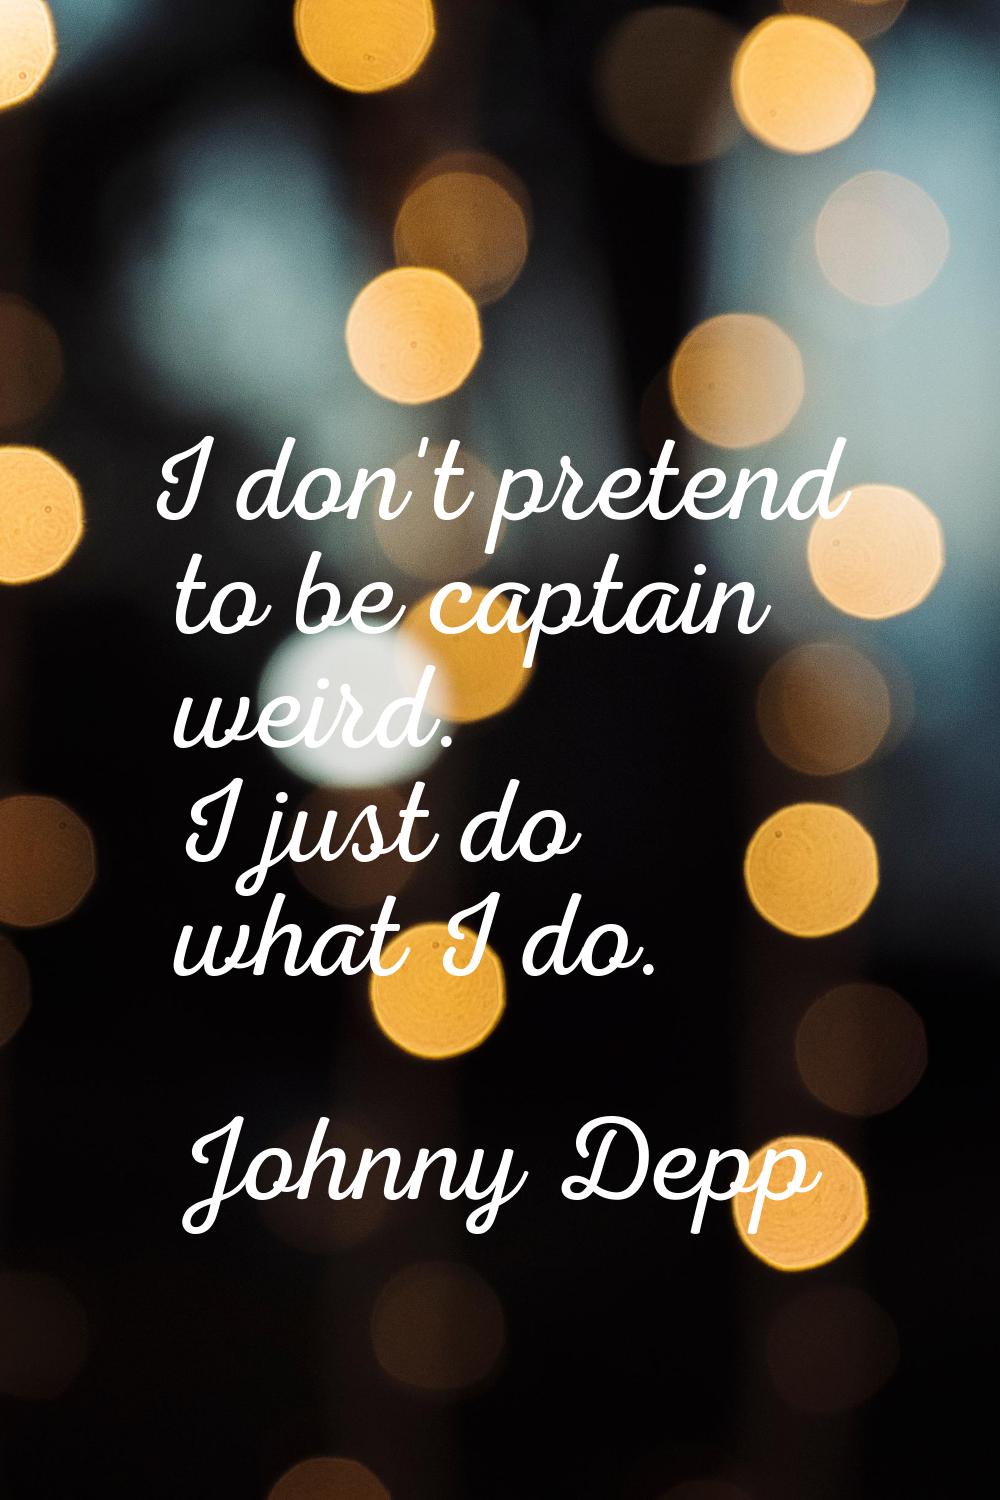 I don't pretend to be captain weird. I just do what I do.